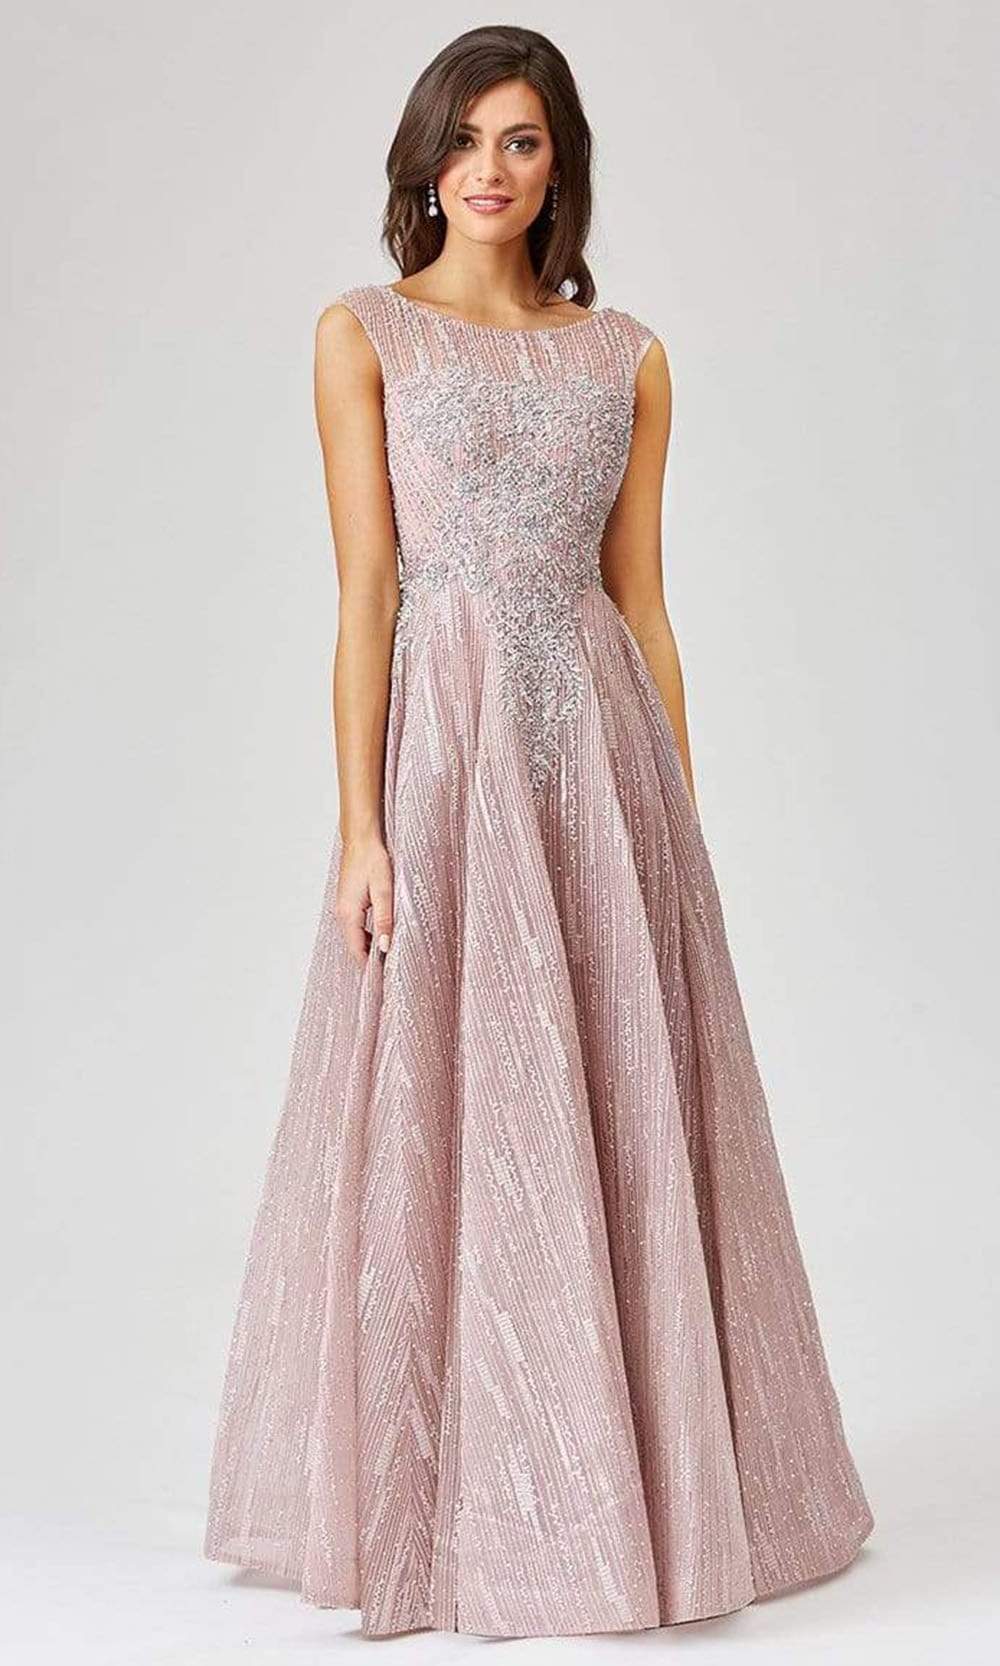 Lara Dresses - 29477 Embellished Bateau A-Line Dress Evening Dresses 0 / Dusty Rose